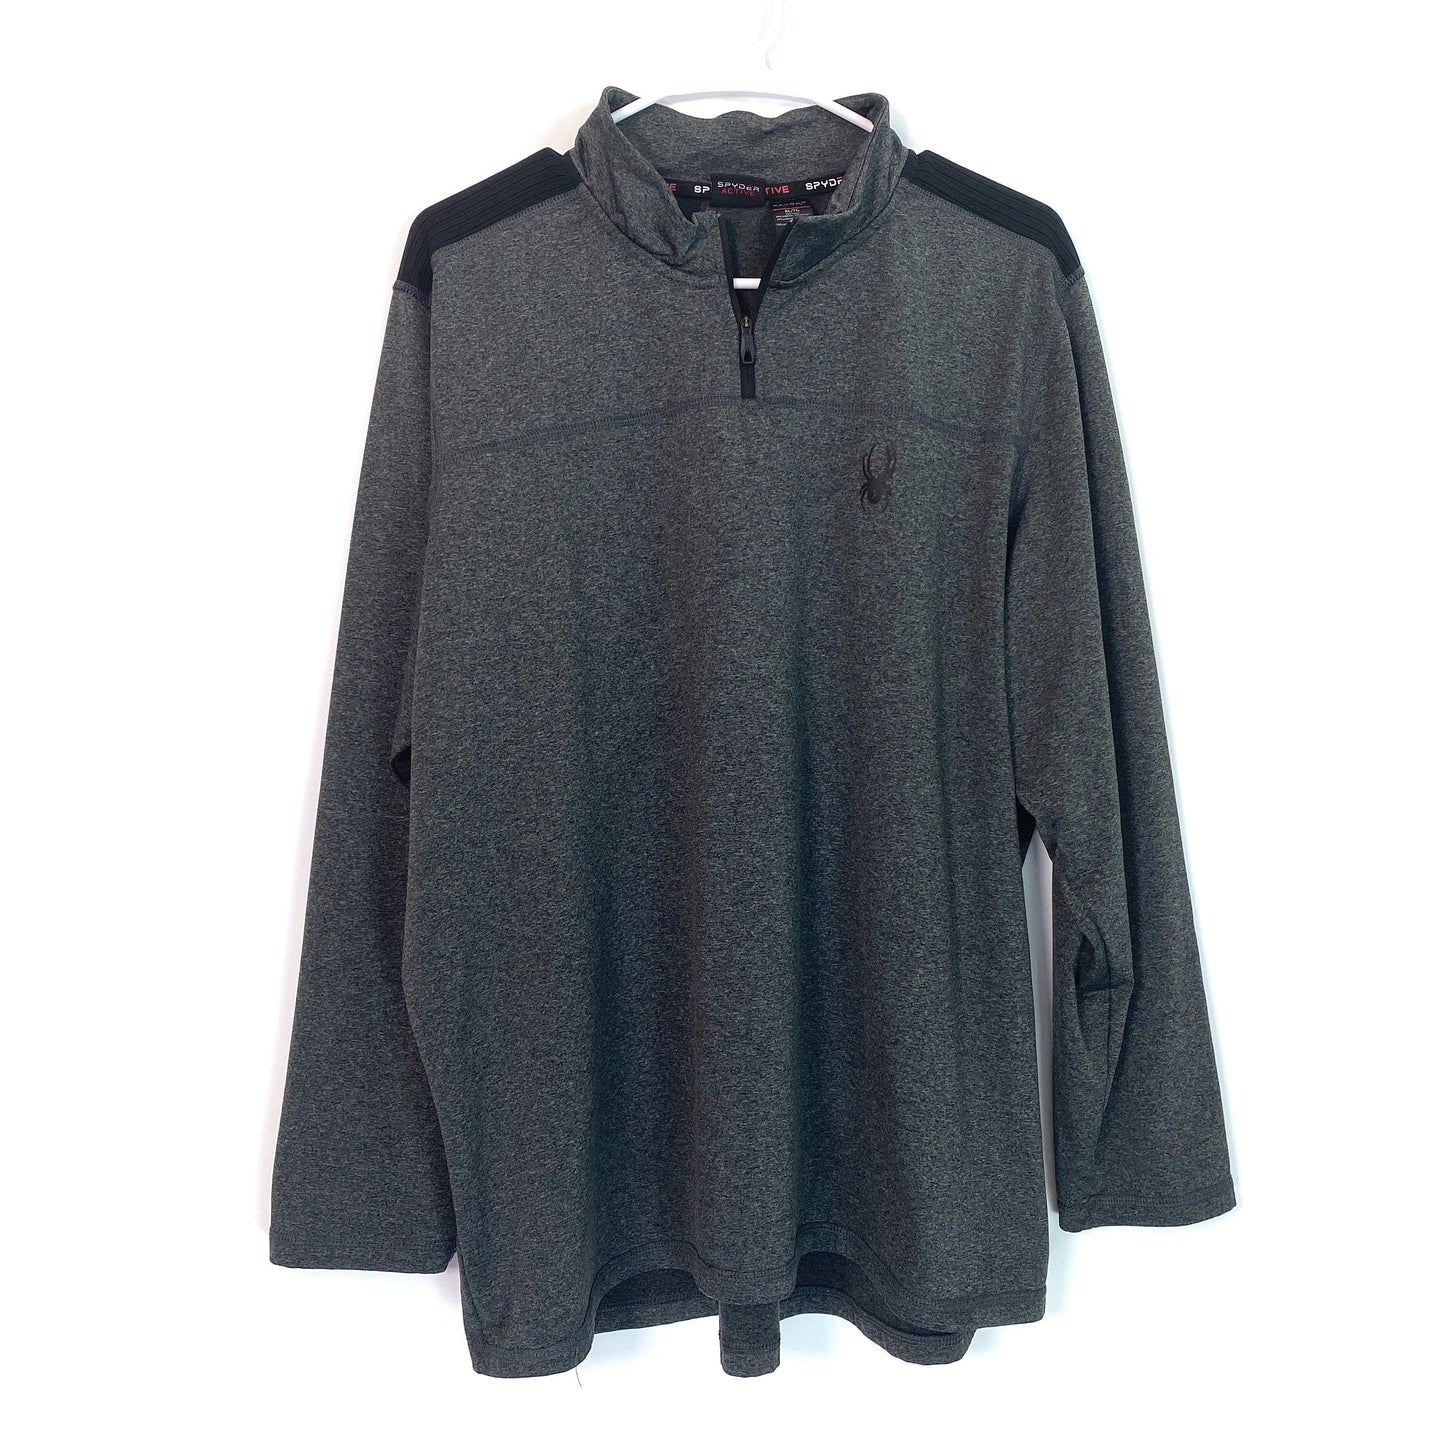 Spyder Mens XL Gray ¼ Zip Pullover Sweatshirt L/s